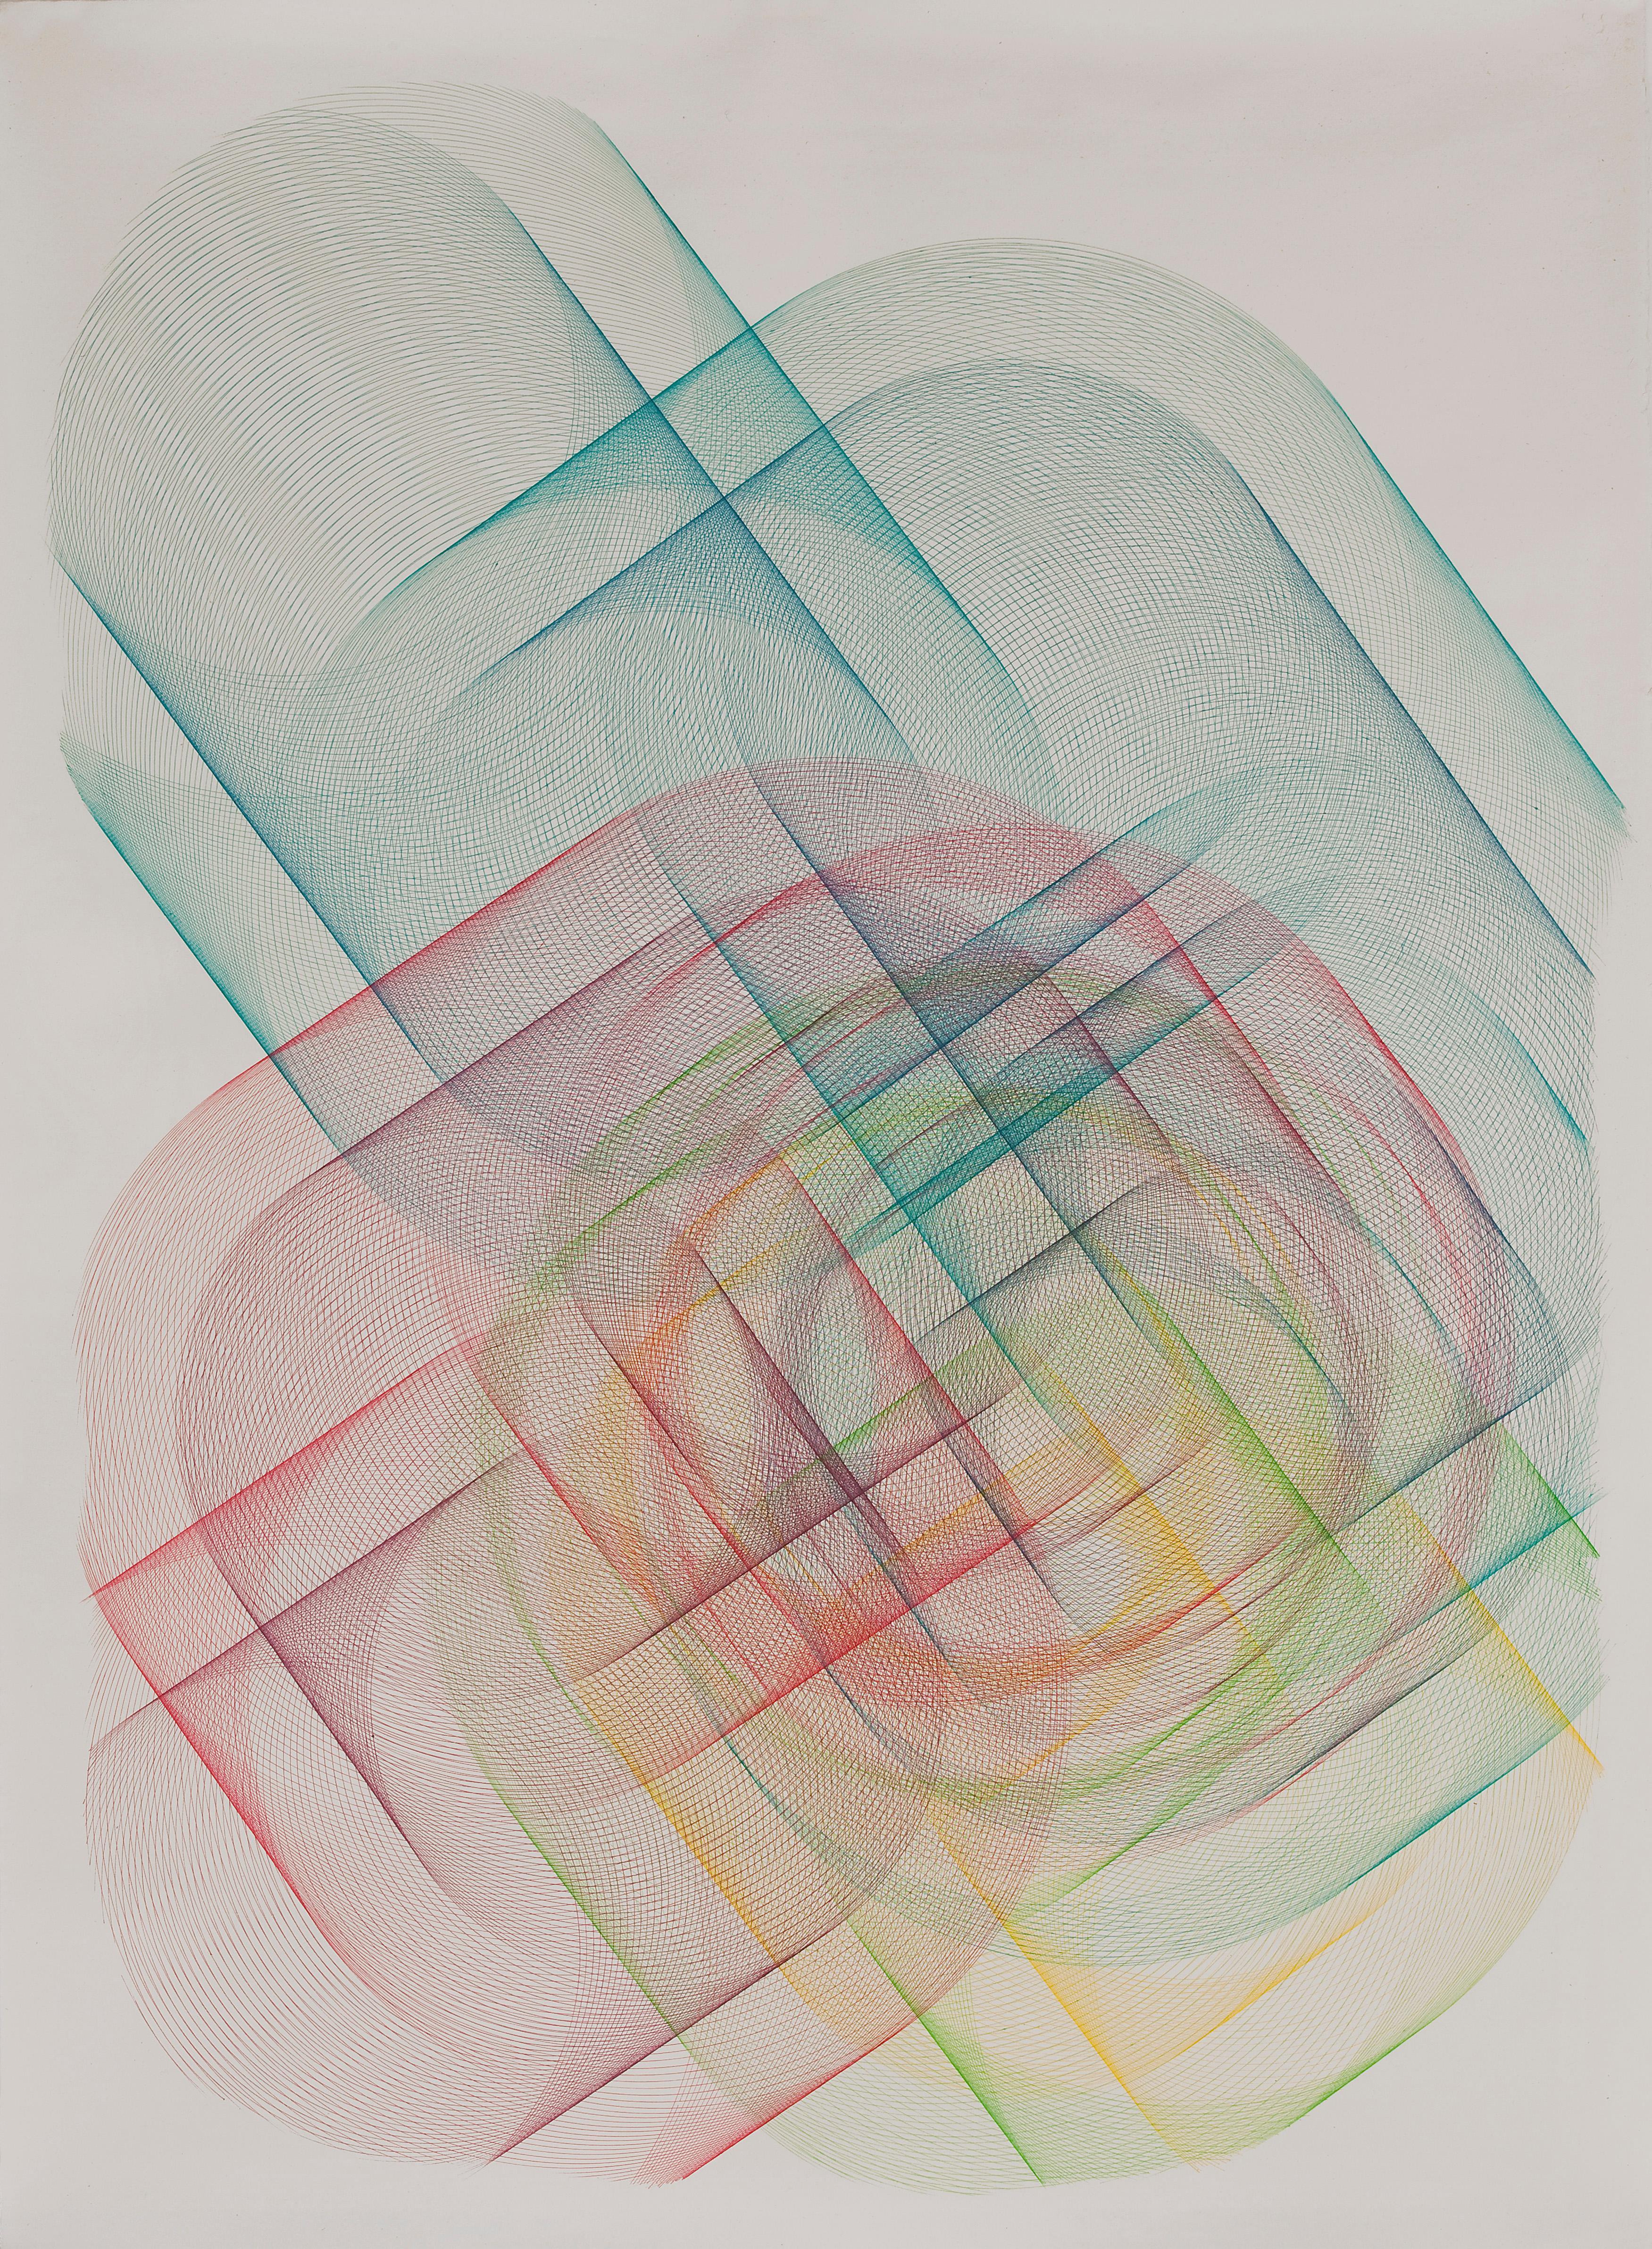 Sebastien Preschoux Abstract Painting - Aciduloïde